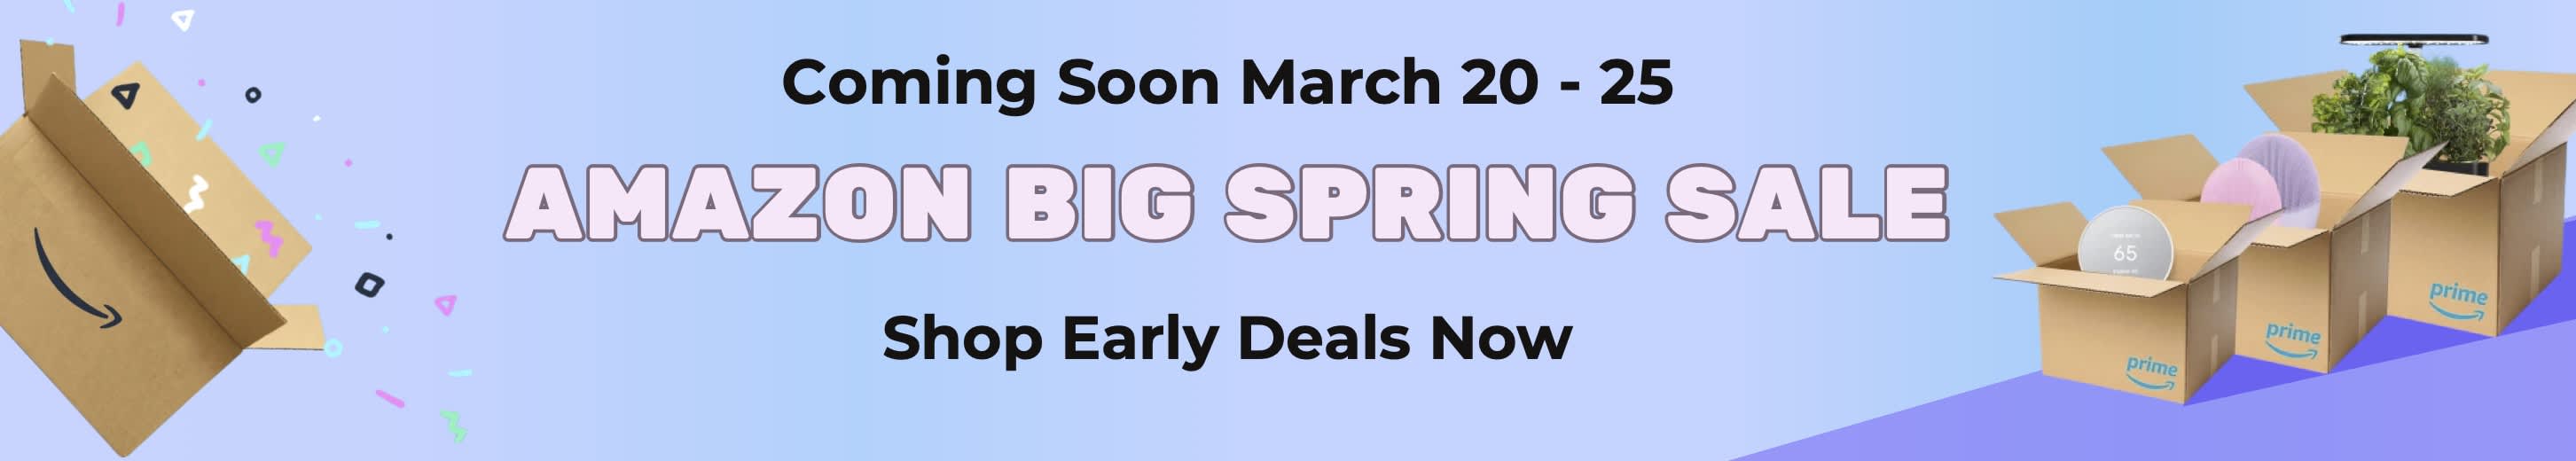 Shop Amazon Big Spring Sale Now!